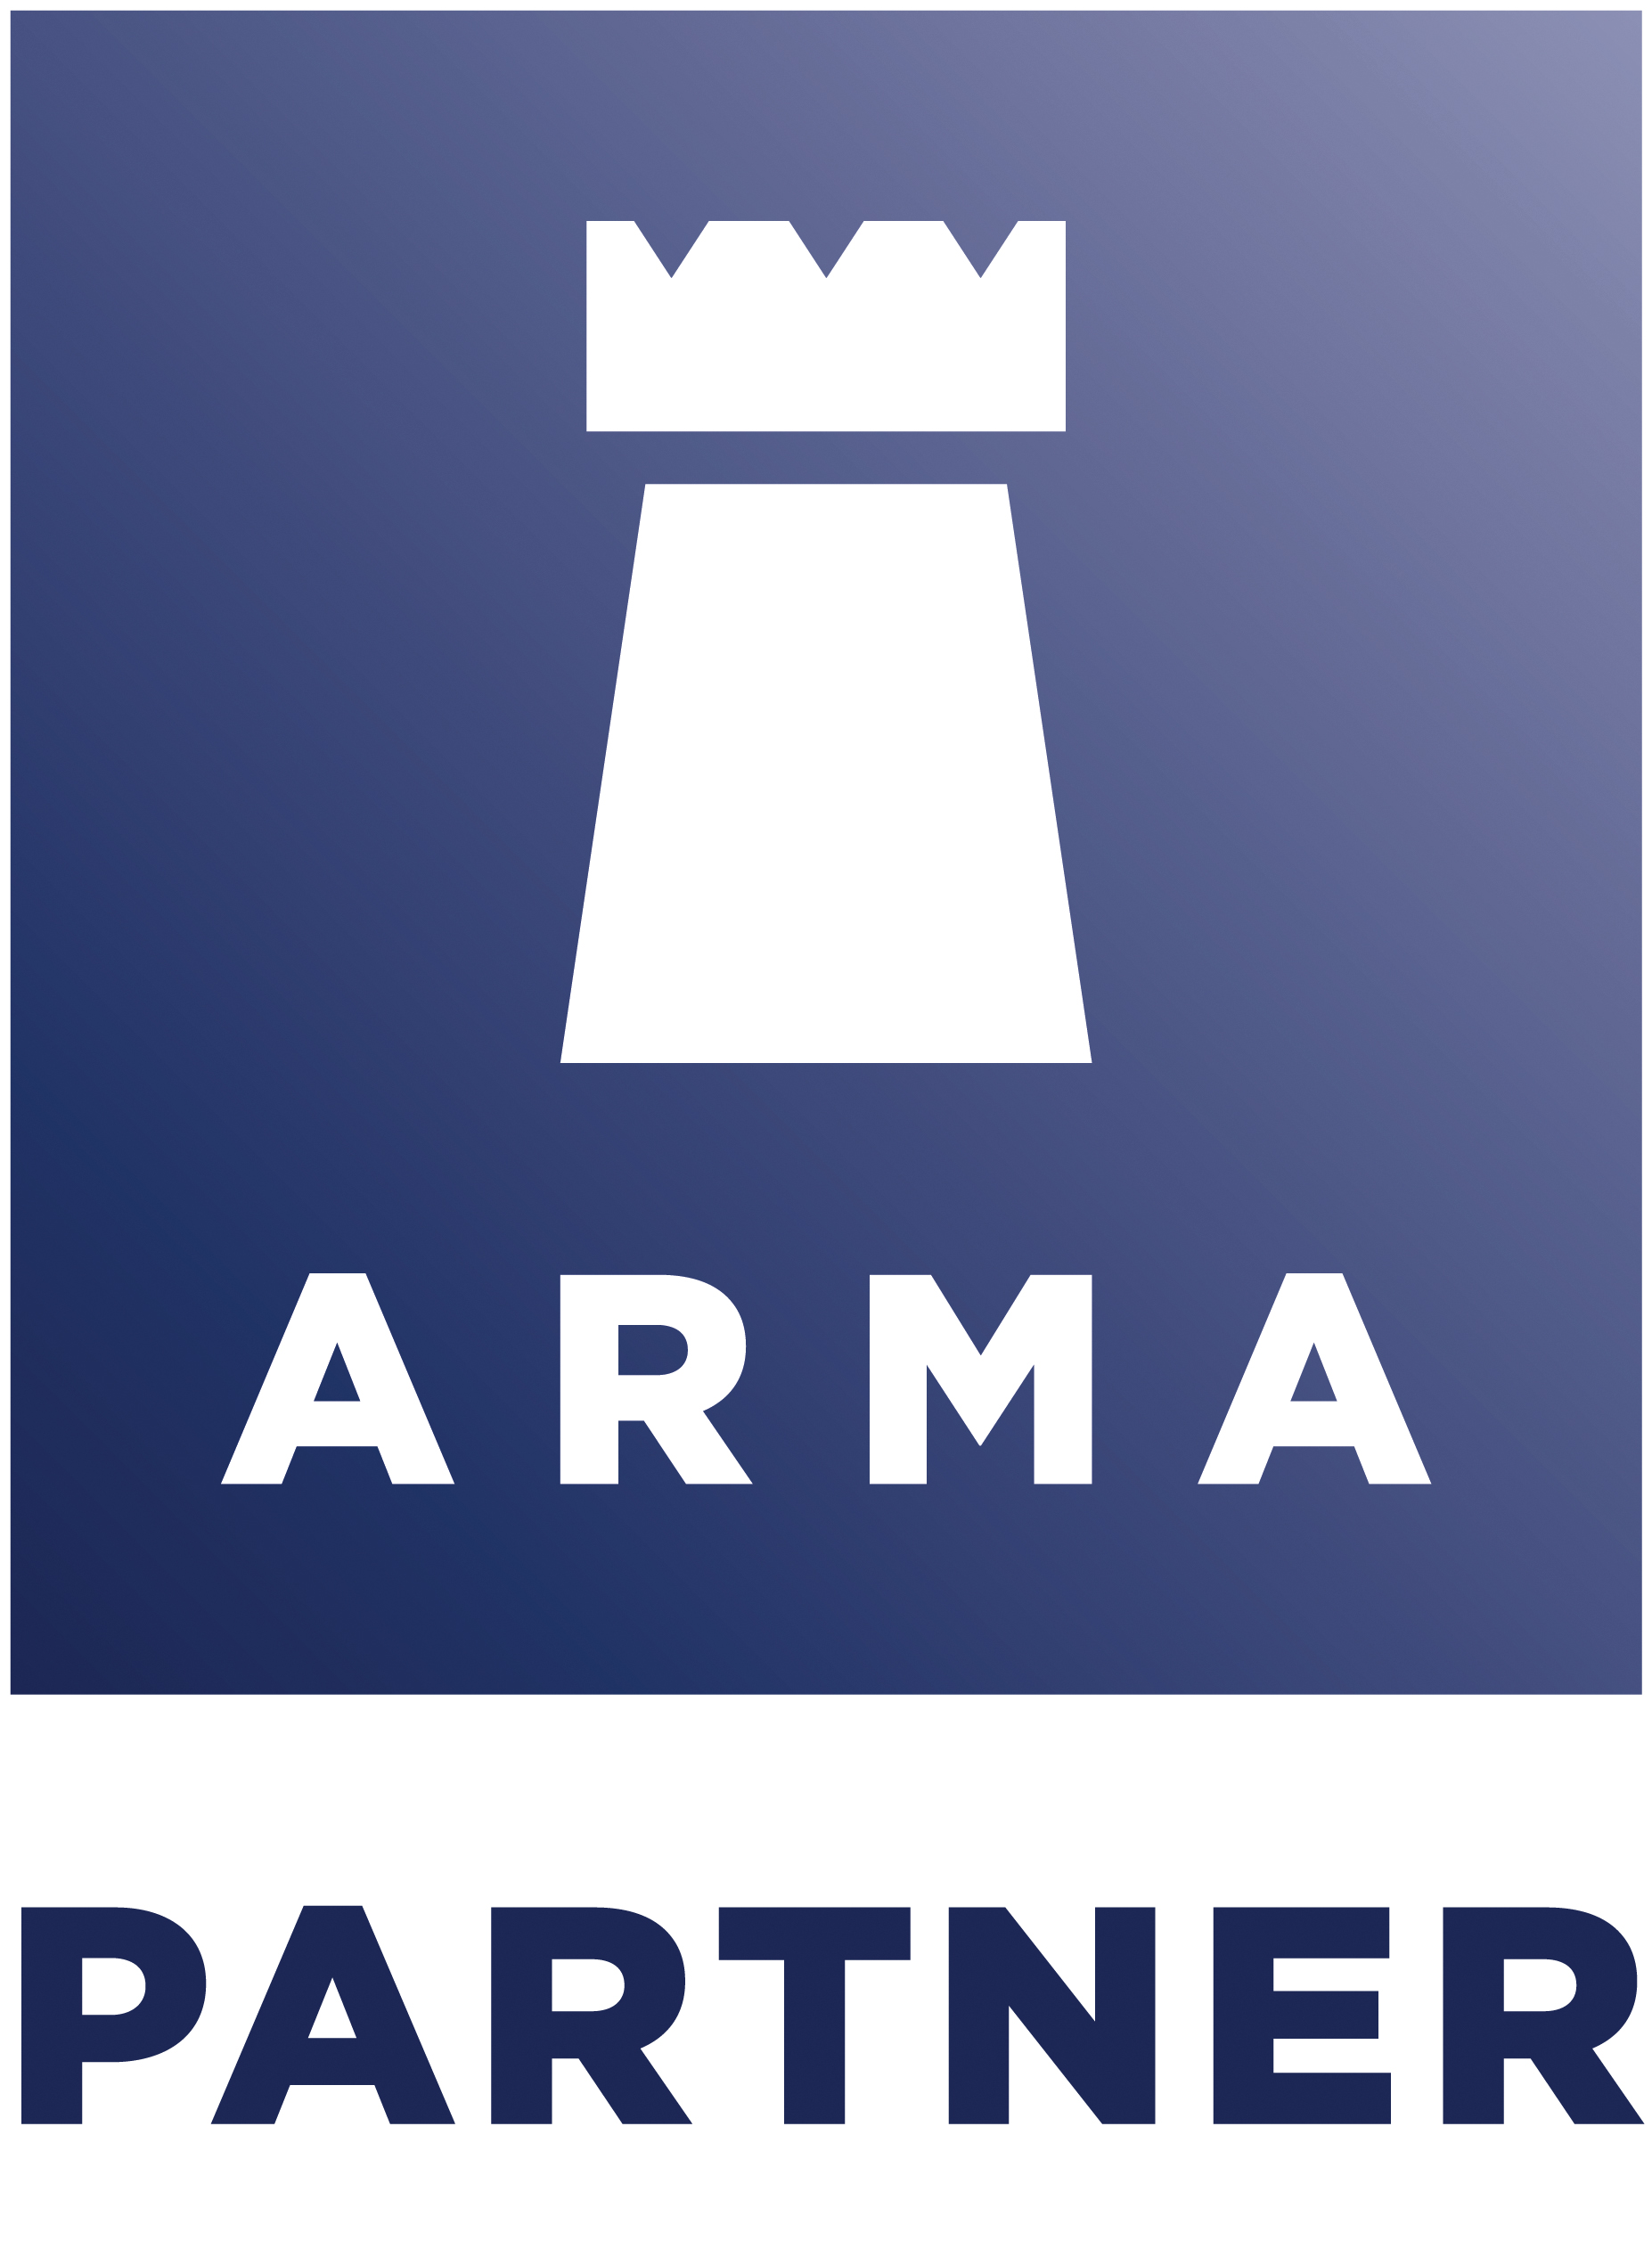 Arma partner logo